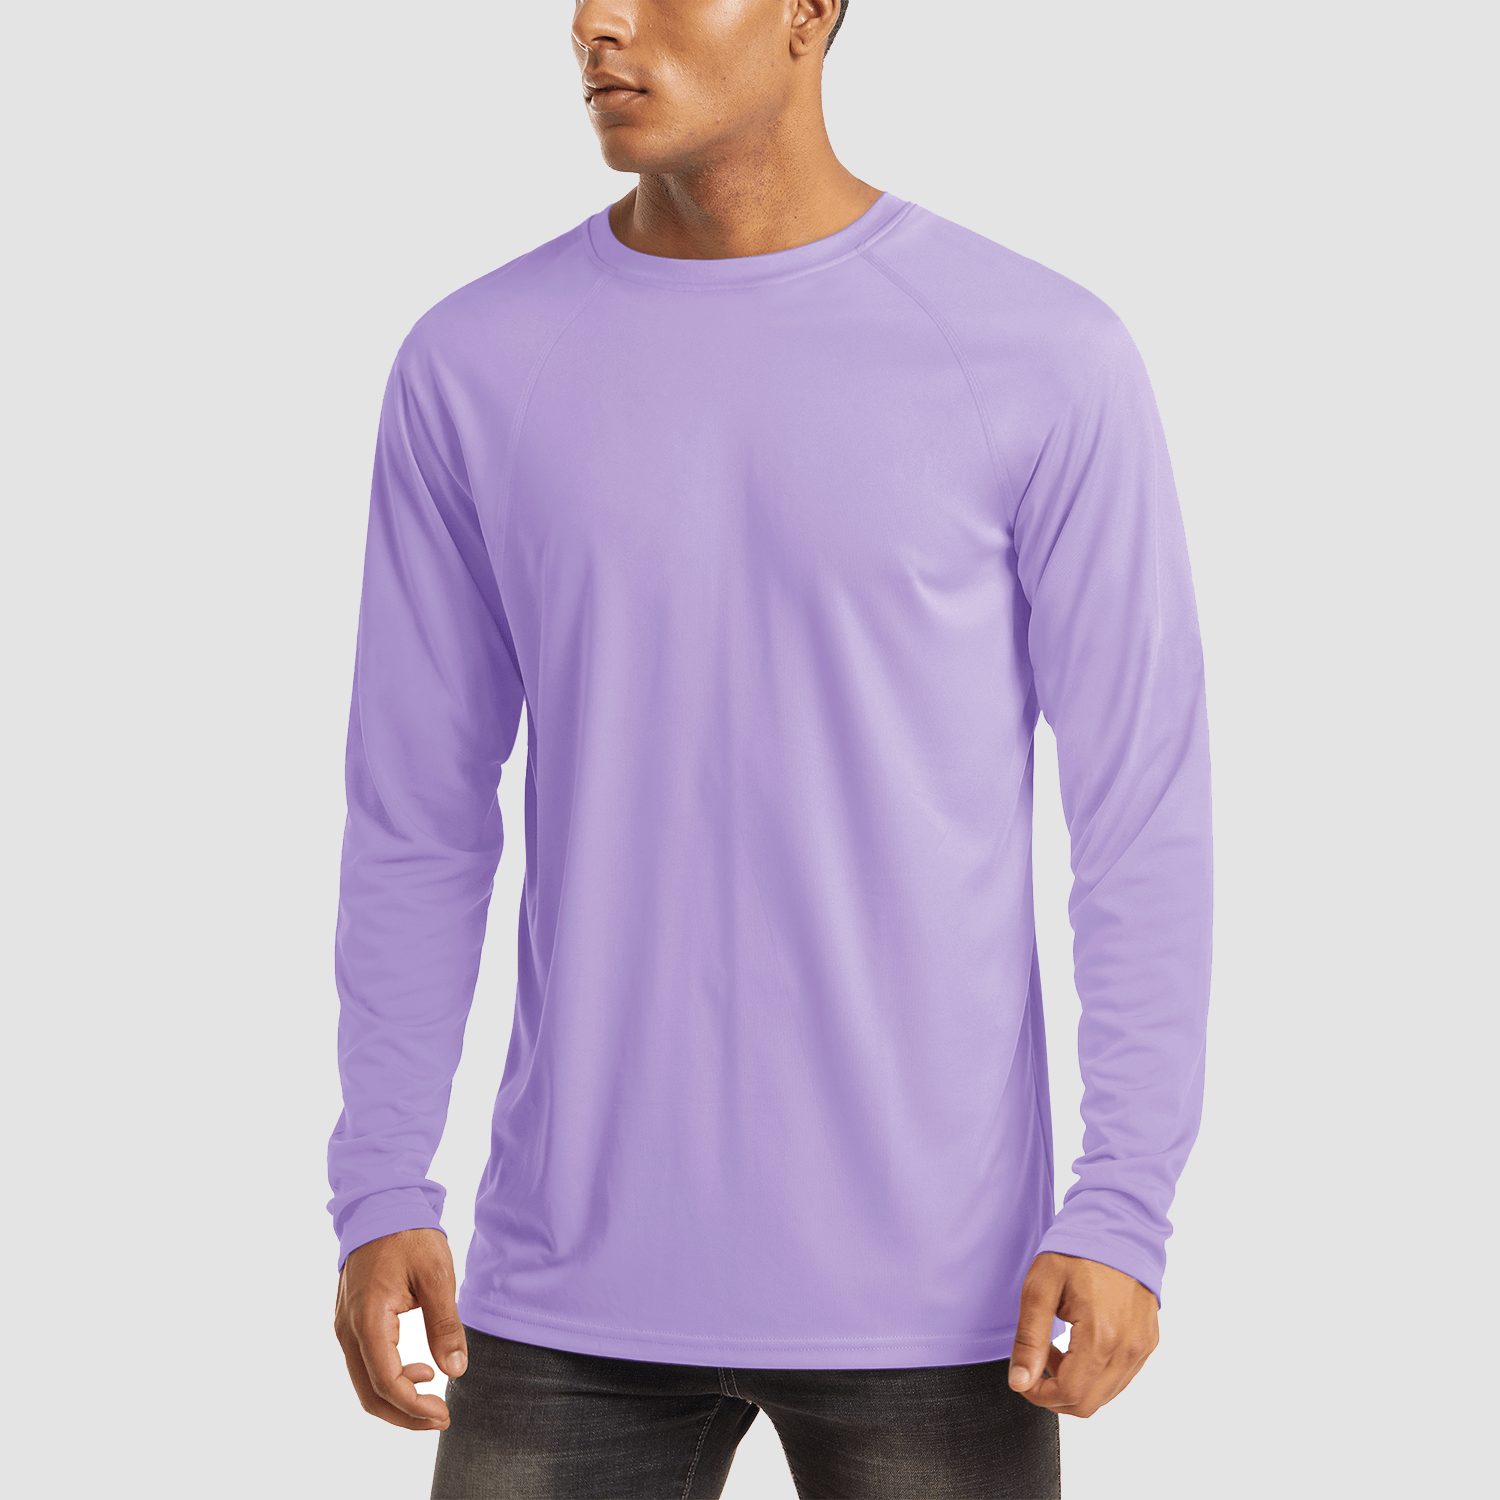 【Buy 4 Get 4th Free】Men's Long Sleeve Hooded Shirt UPF 50+ Athletic Shirt, Light Purple / M